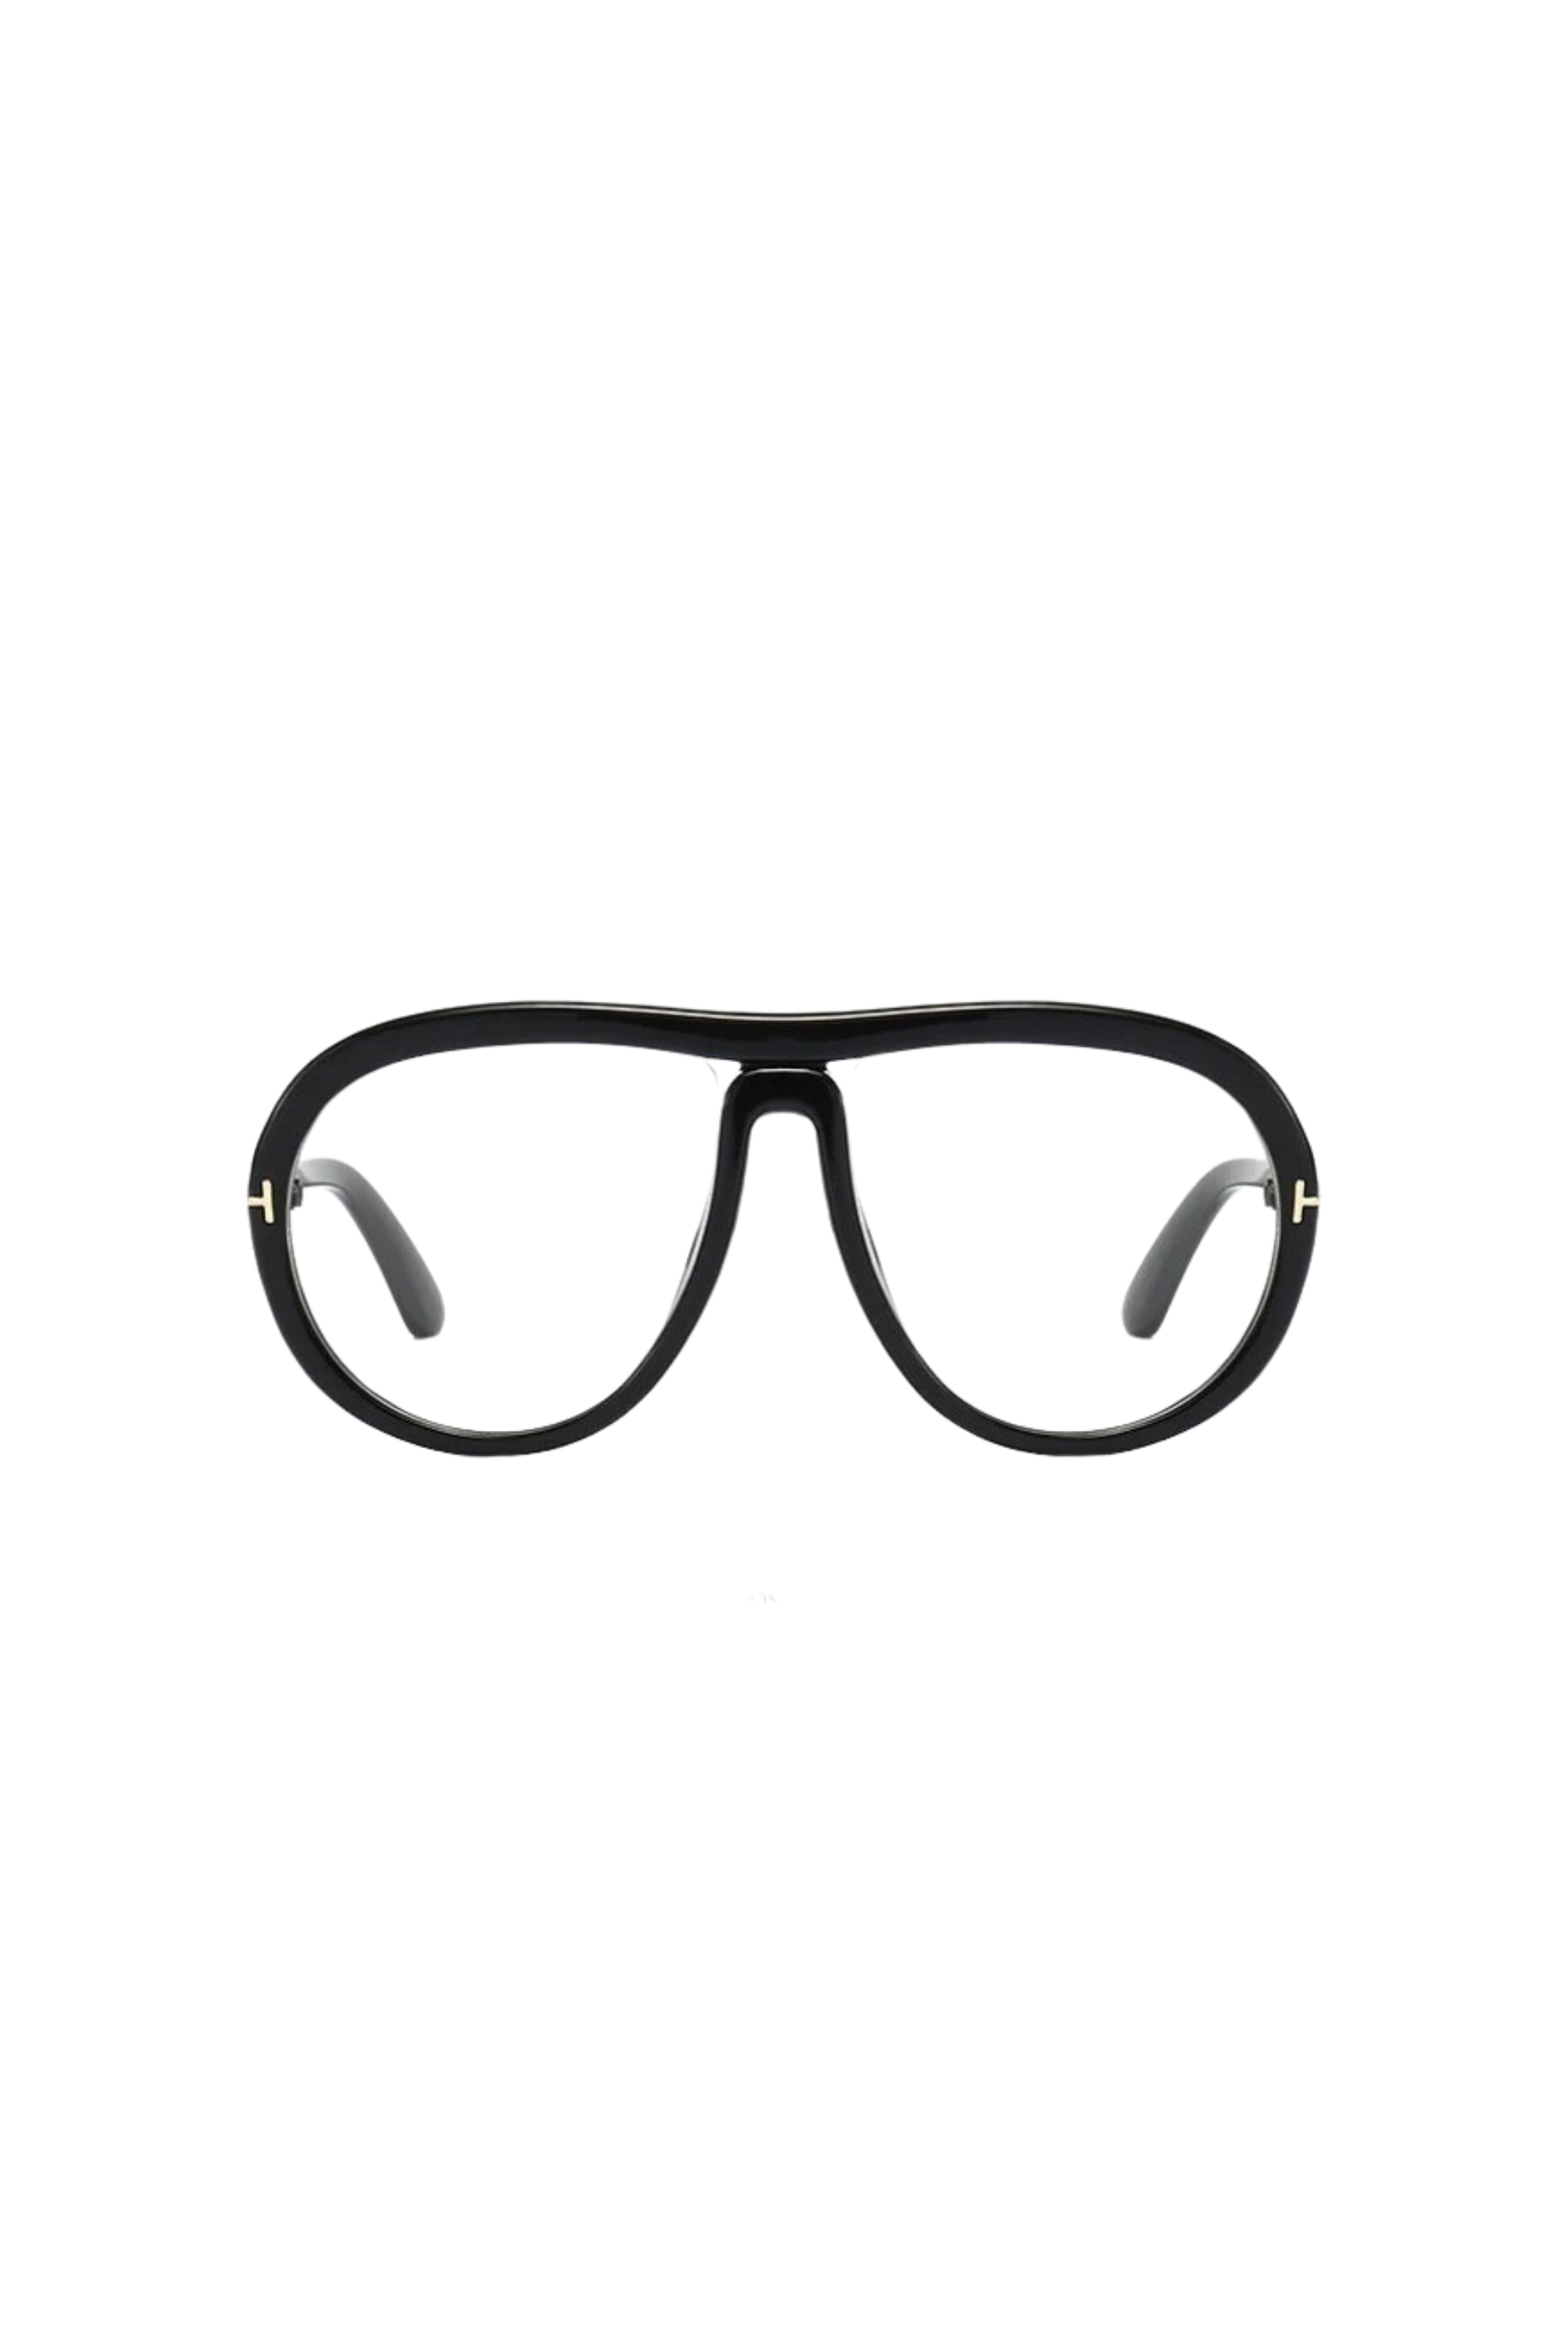 Tab Black Clear Glasses